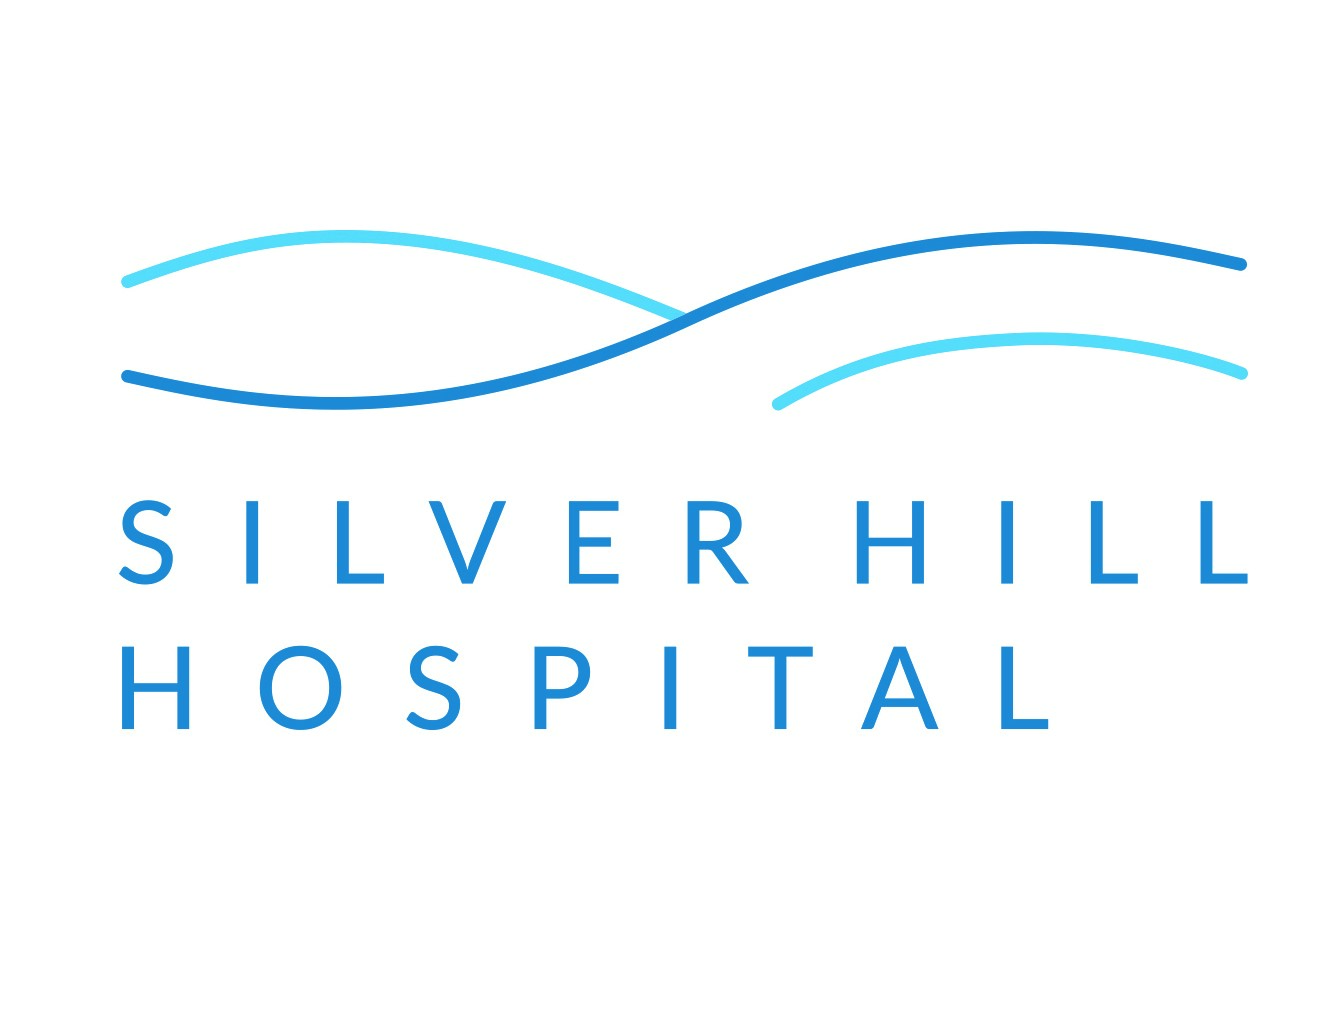 Silver Hill Hospital